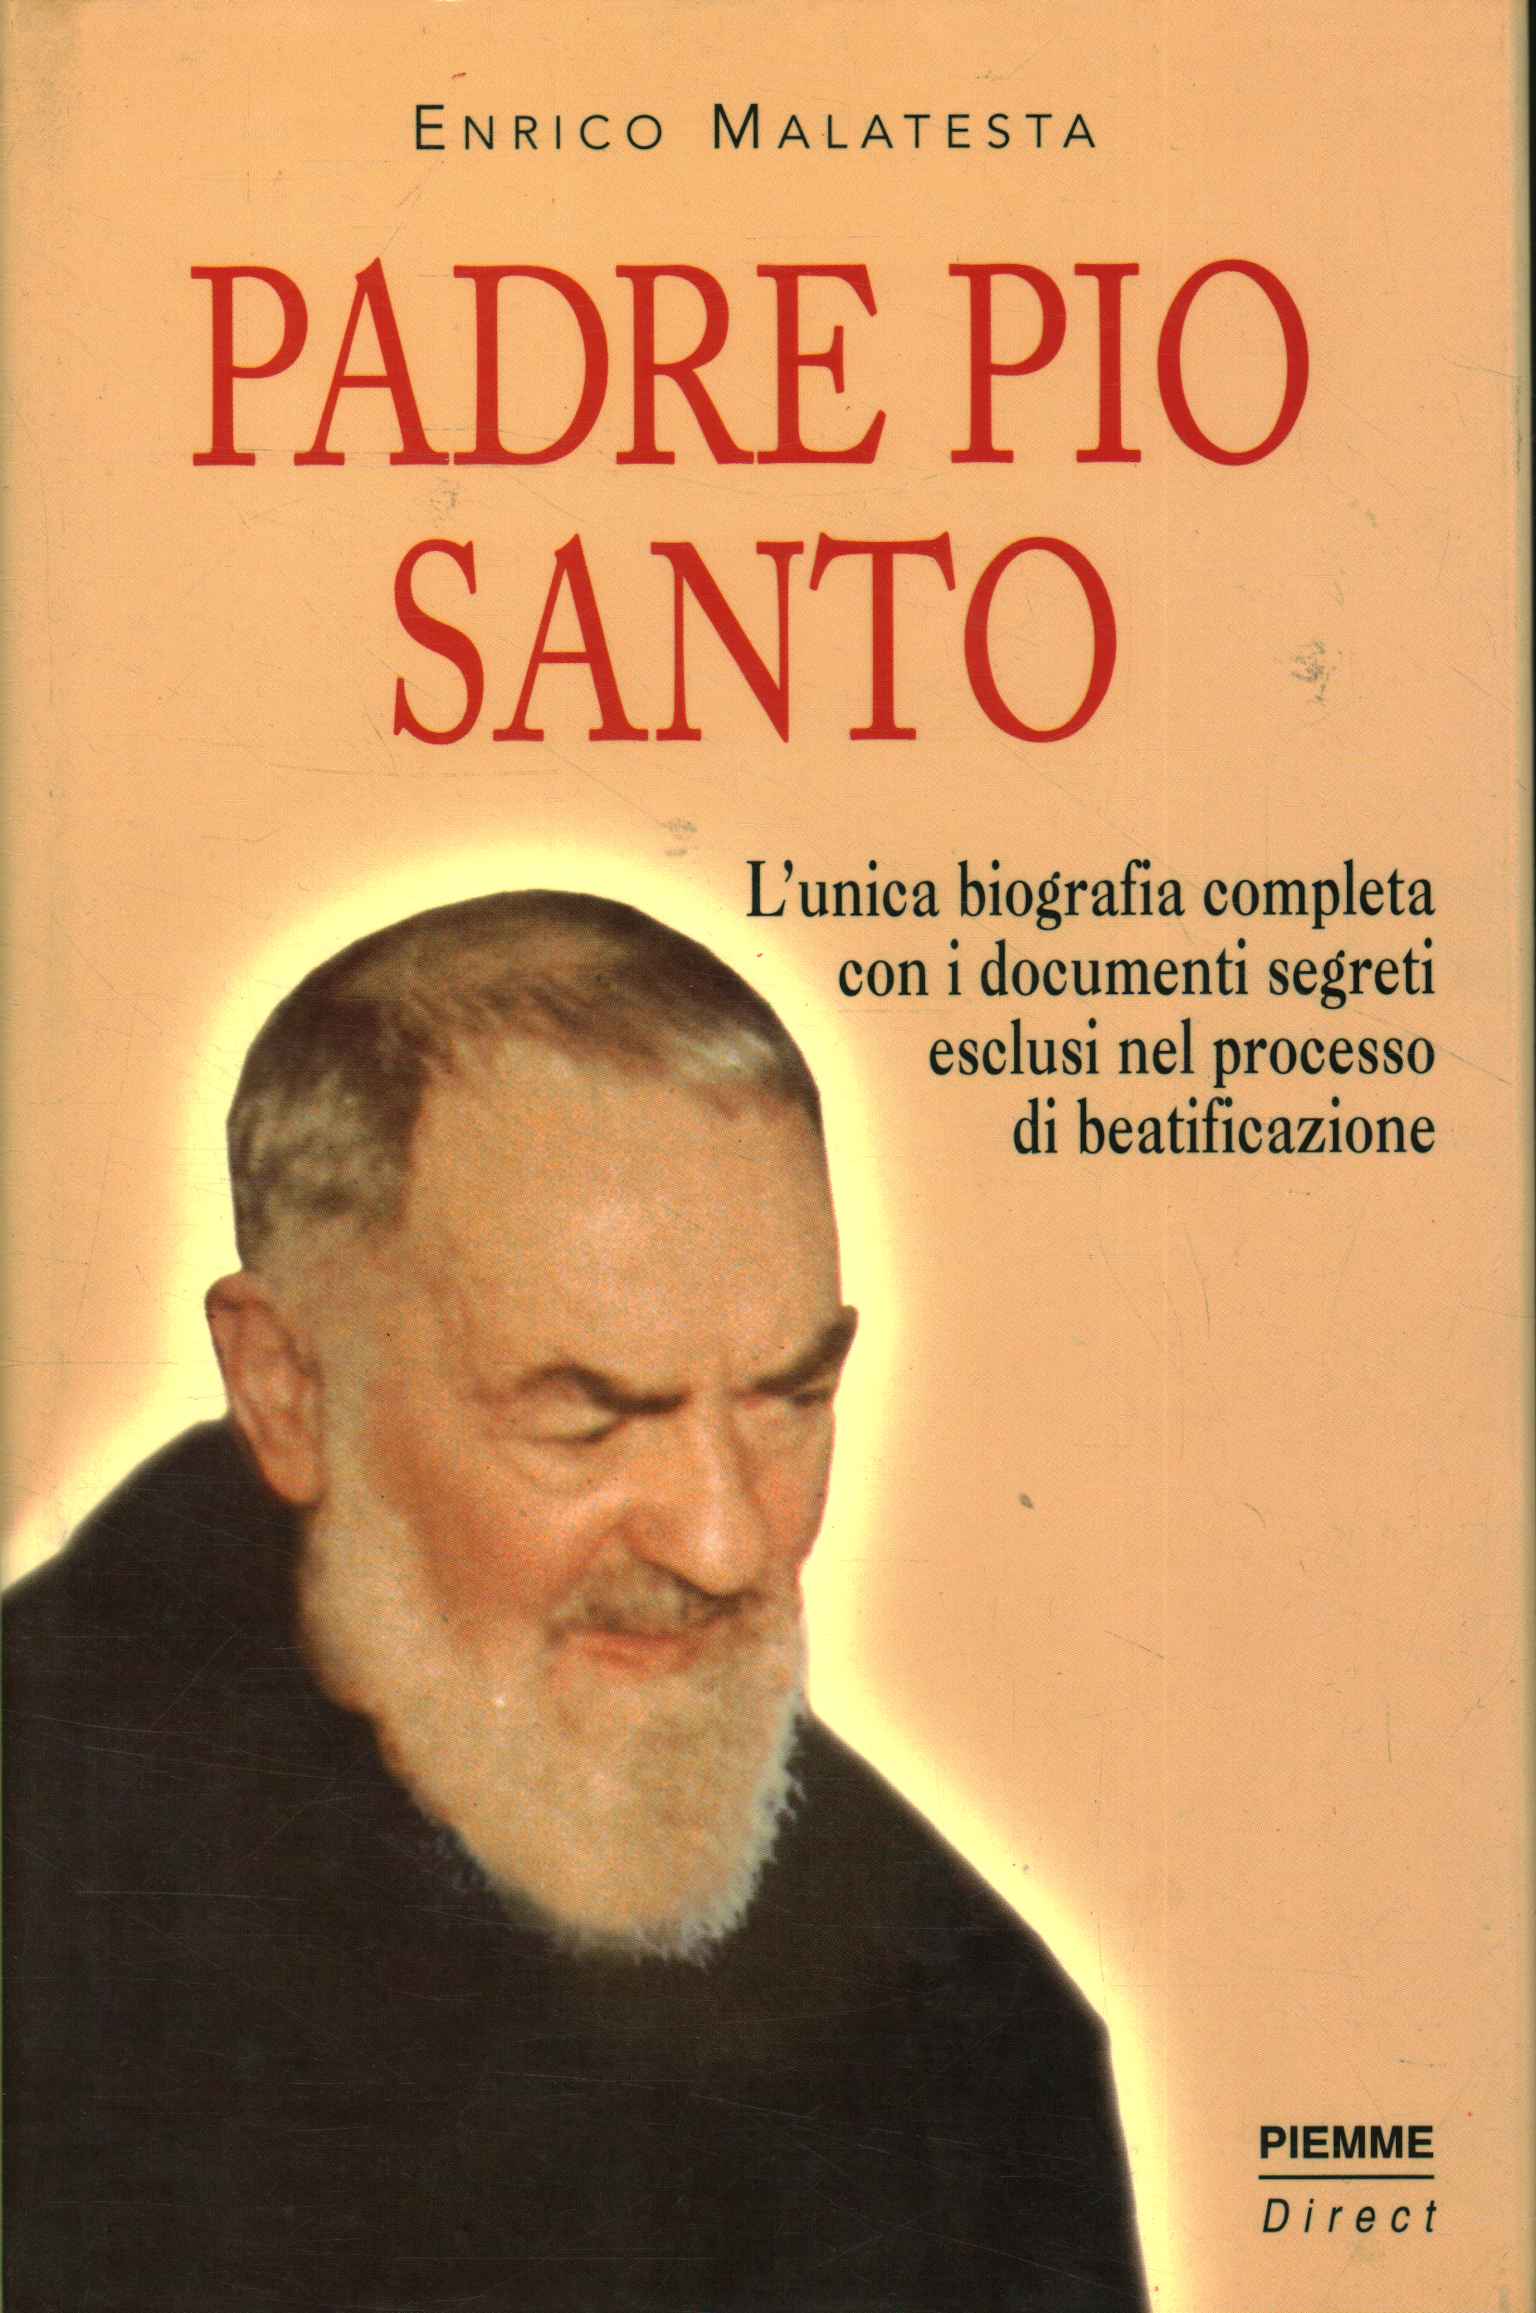 Pater Pio Santo